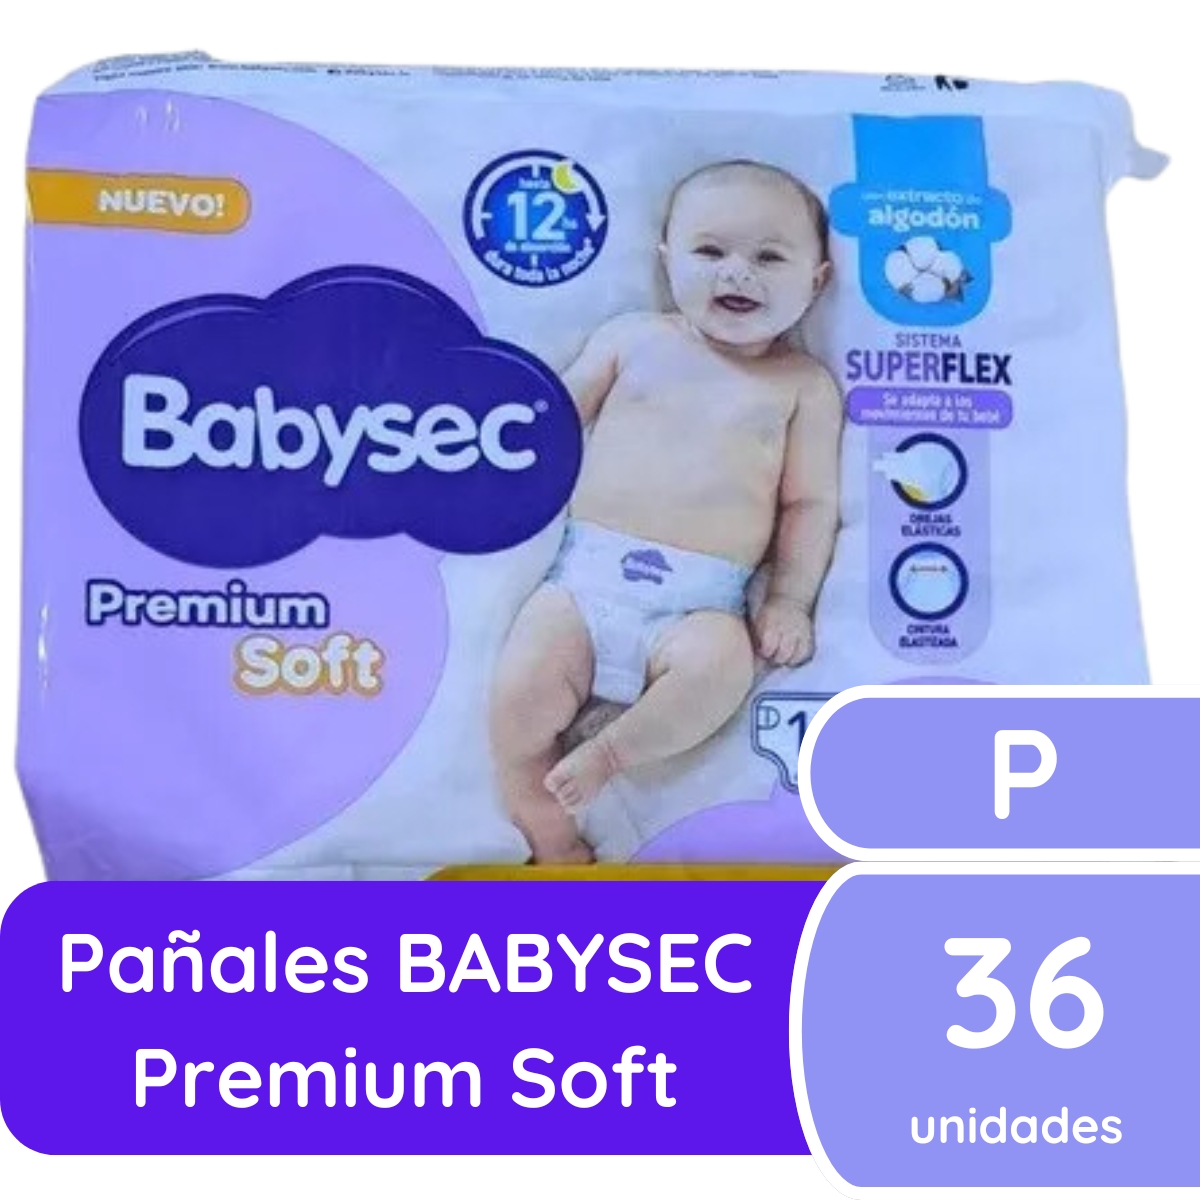 Imagen 1 de 1 de Pañales Babysec Premium Soft Talle Pequeño (P) Hasta 6 kilos x36u